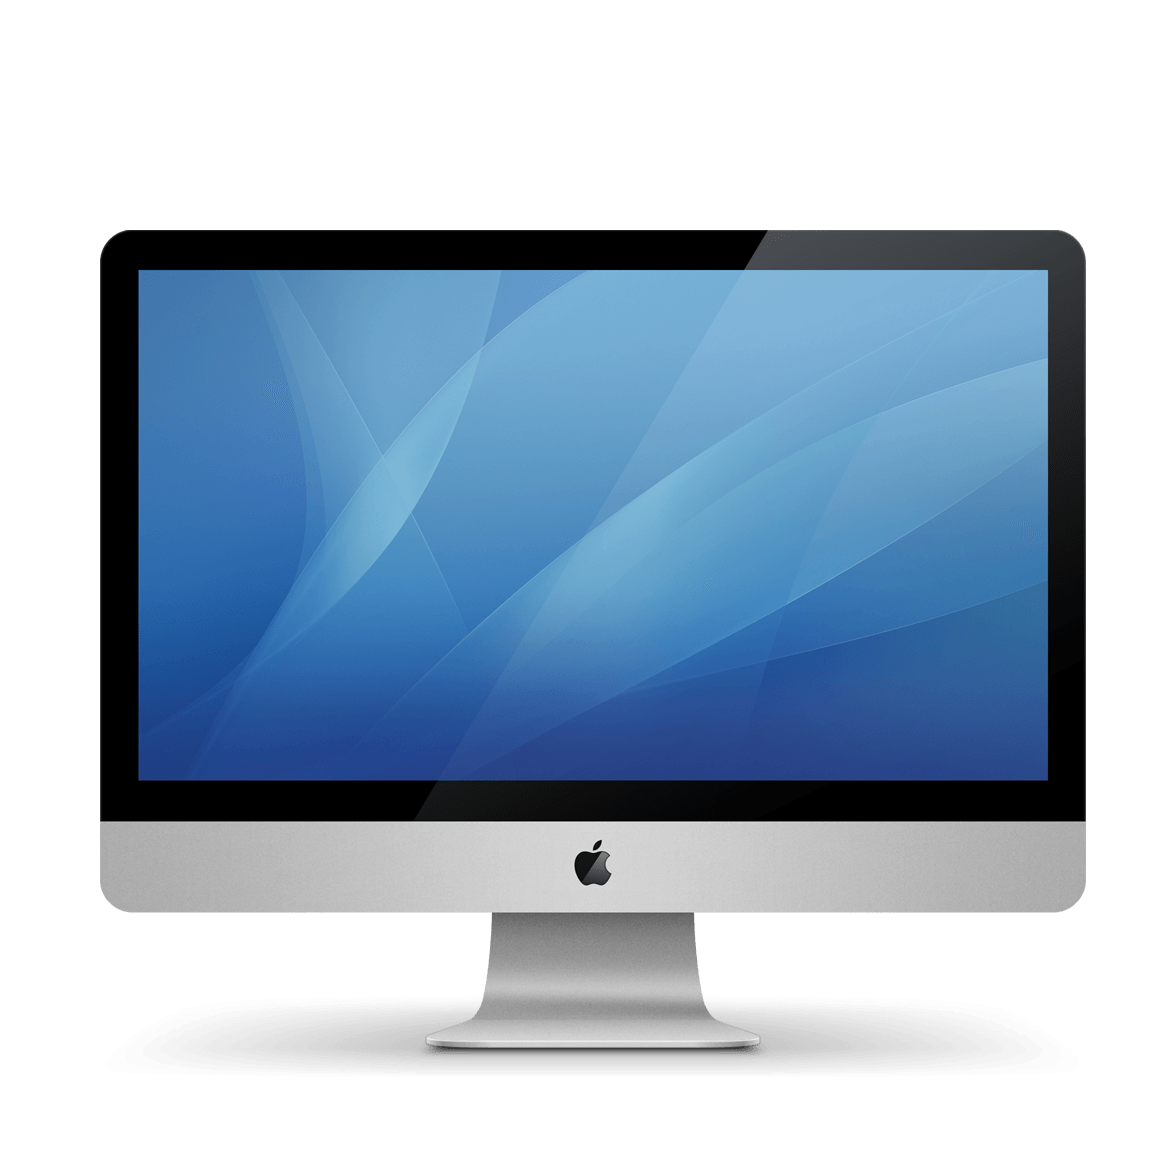 Apple Monitor PNG HD File pngteam.com